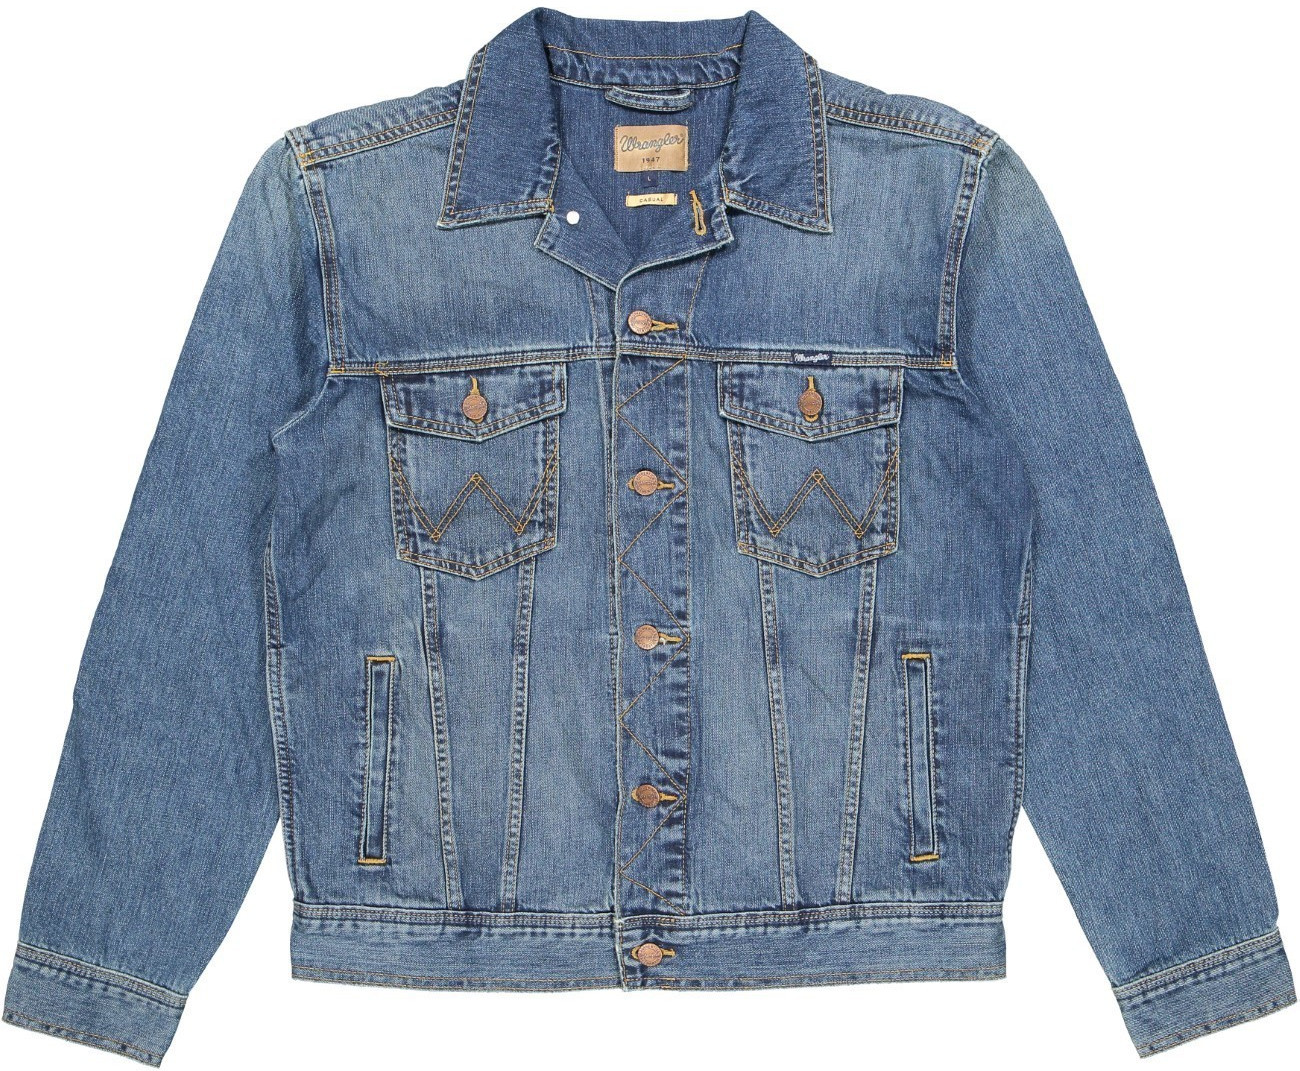 Wrangler Man Western Denim Jacket blue a € 64,90 | Miglior prezzo su idealo